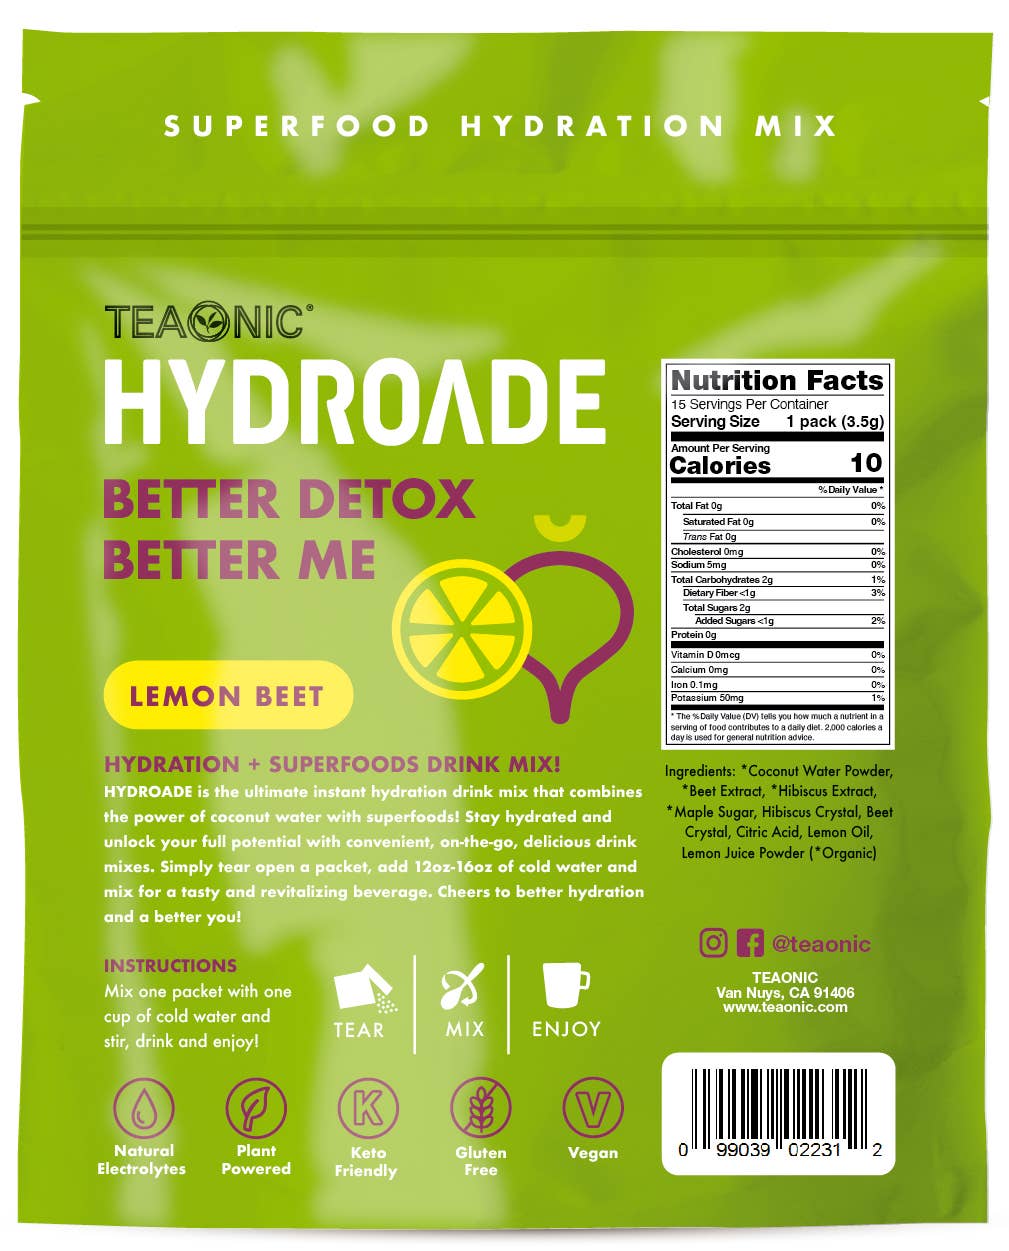 HYDROADE Superfood Hydration Mix: Detox